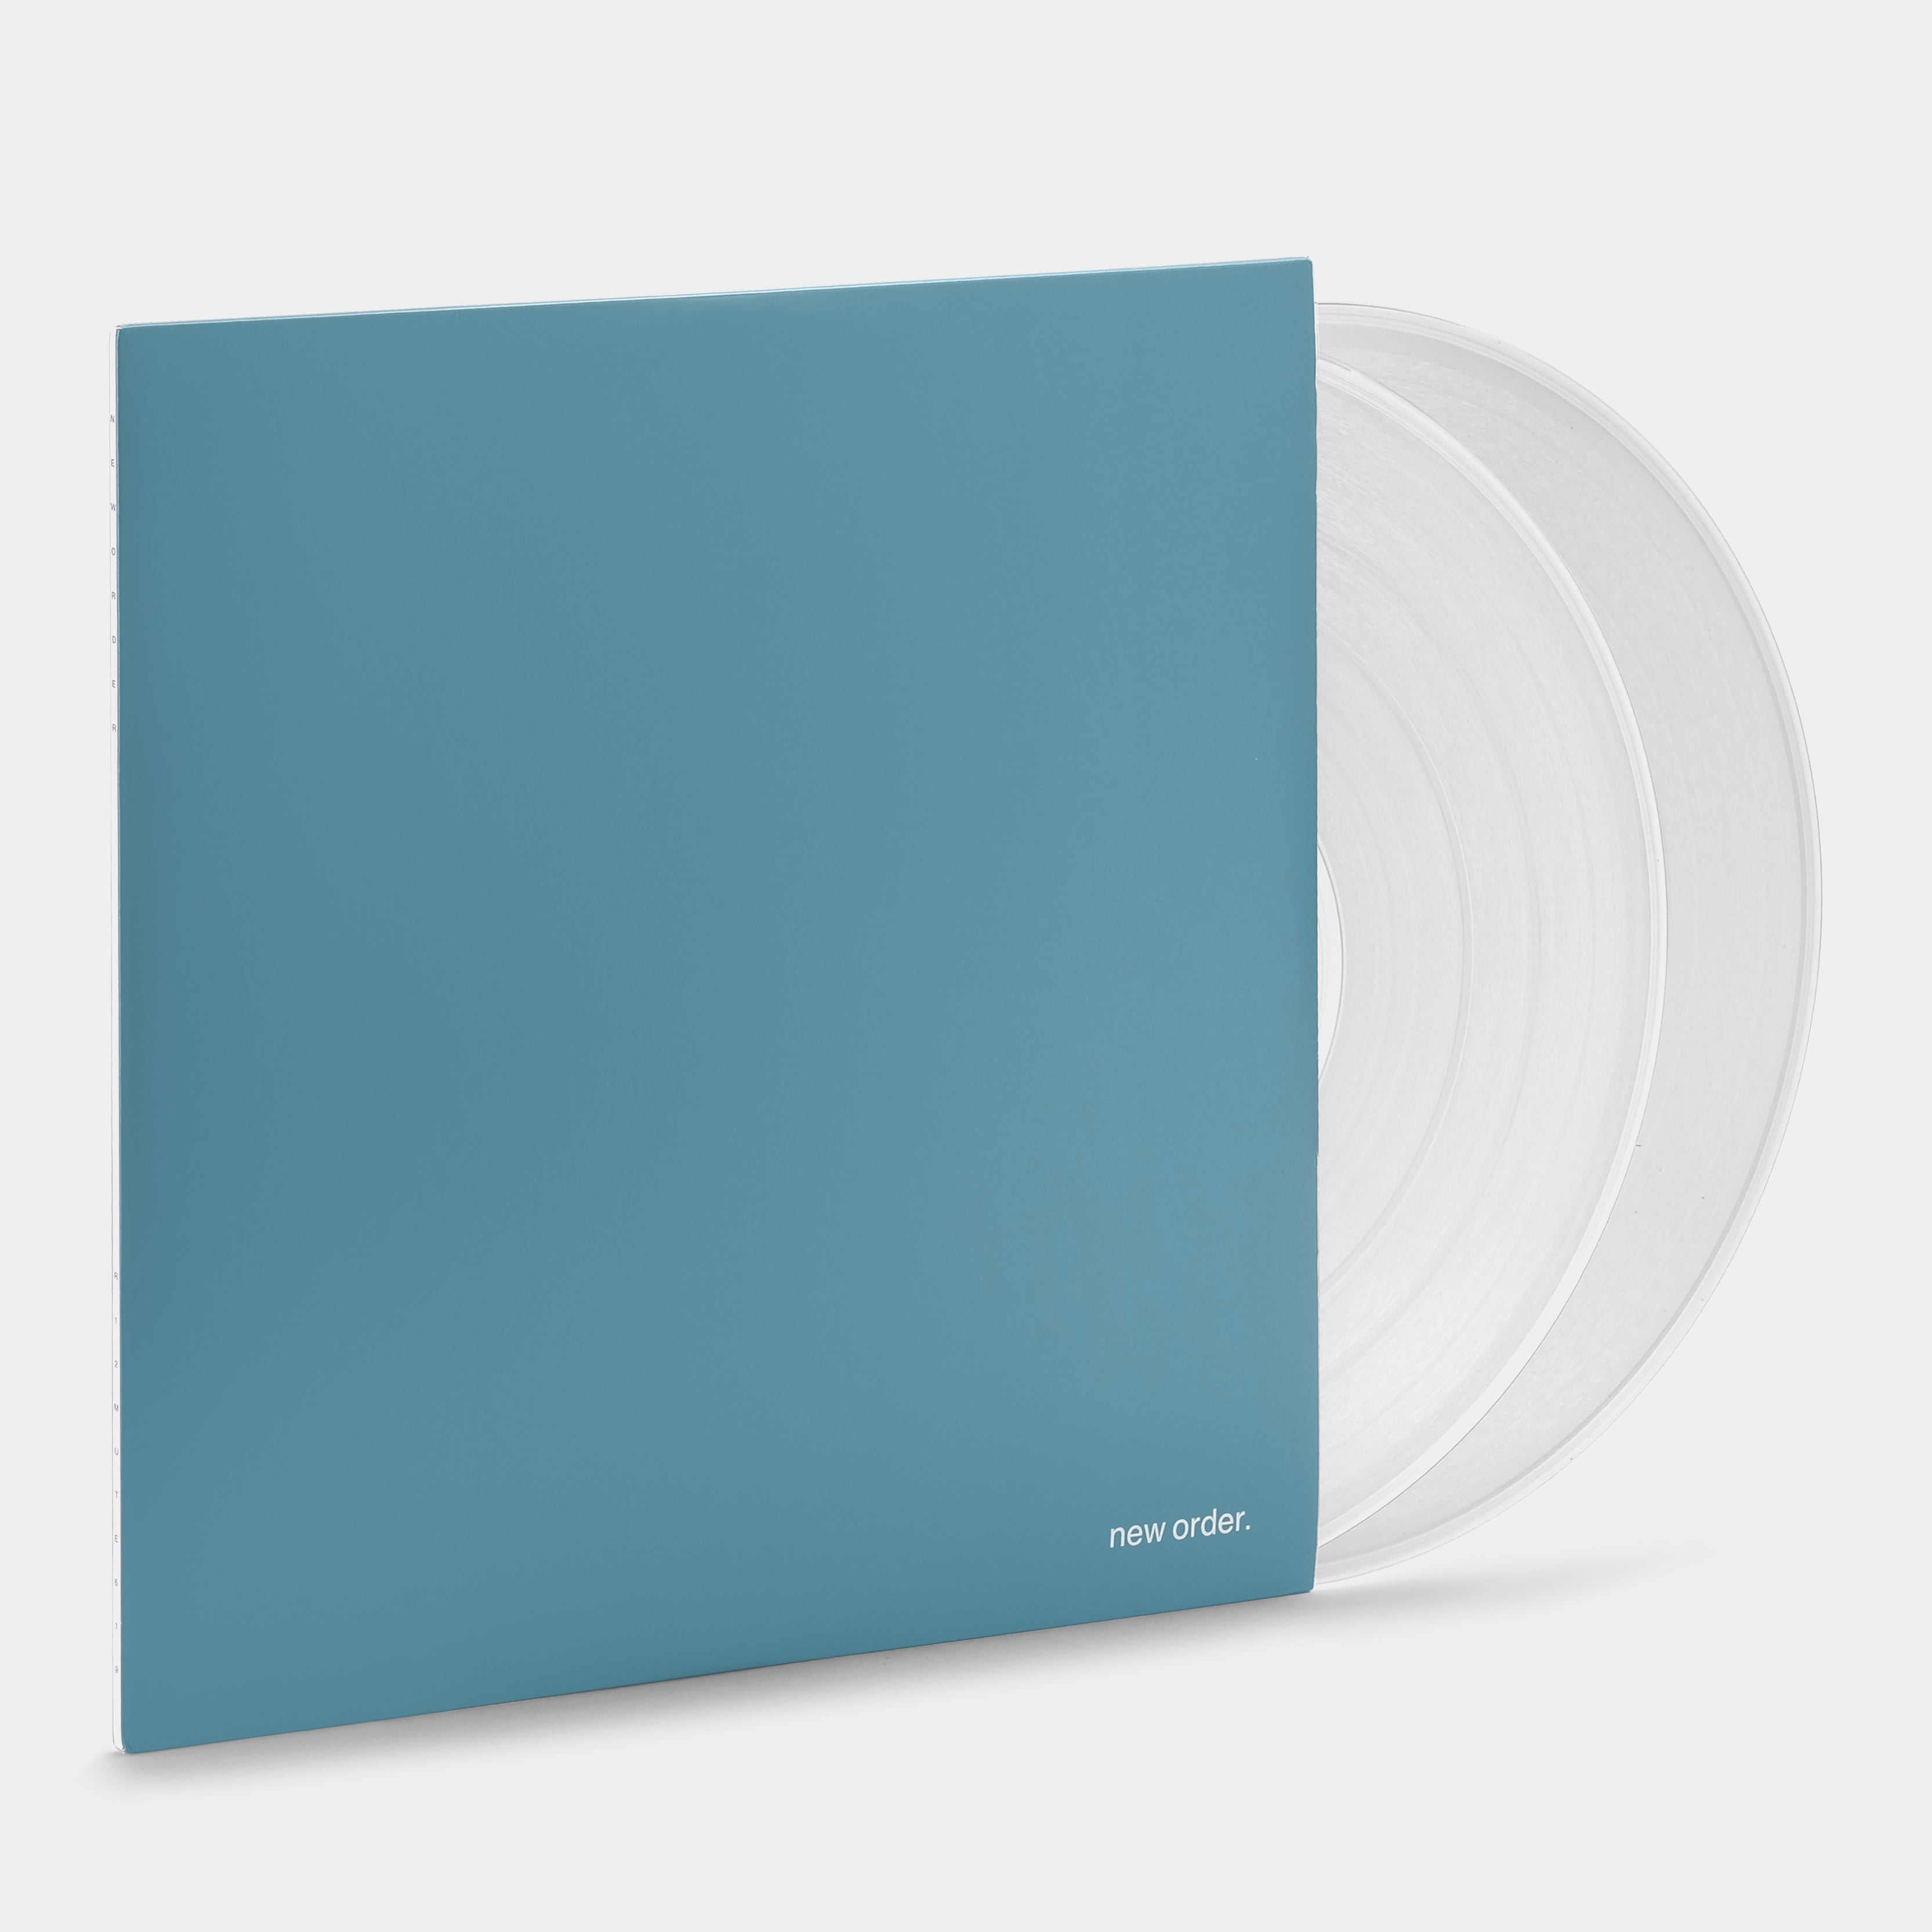 New Order - Be A Rebel (Remixes) 2x12" Single Clear Vinyl Record